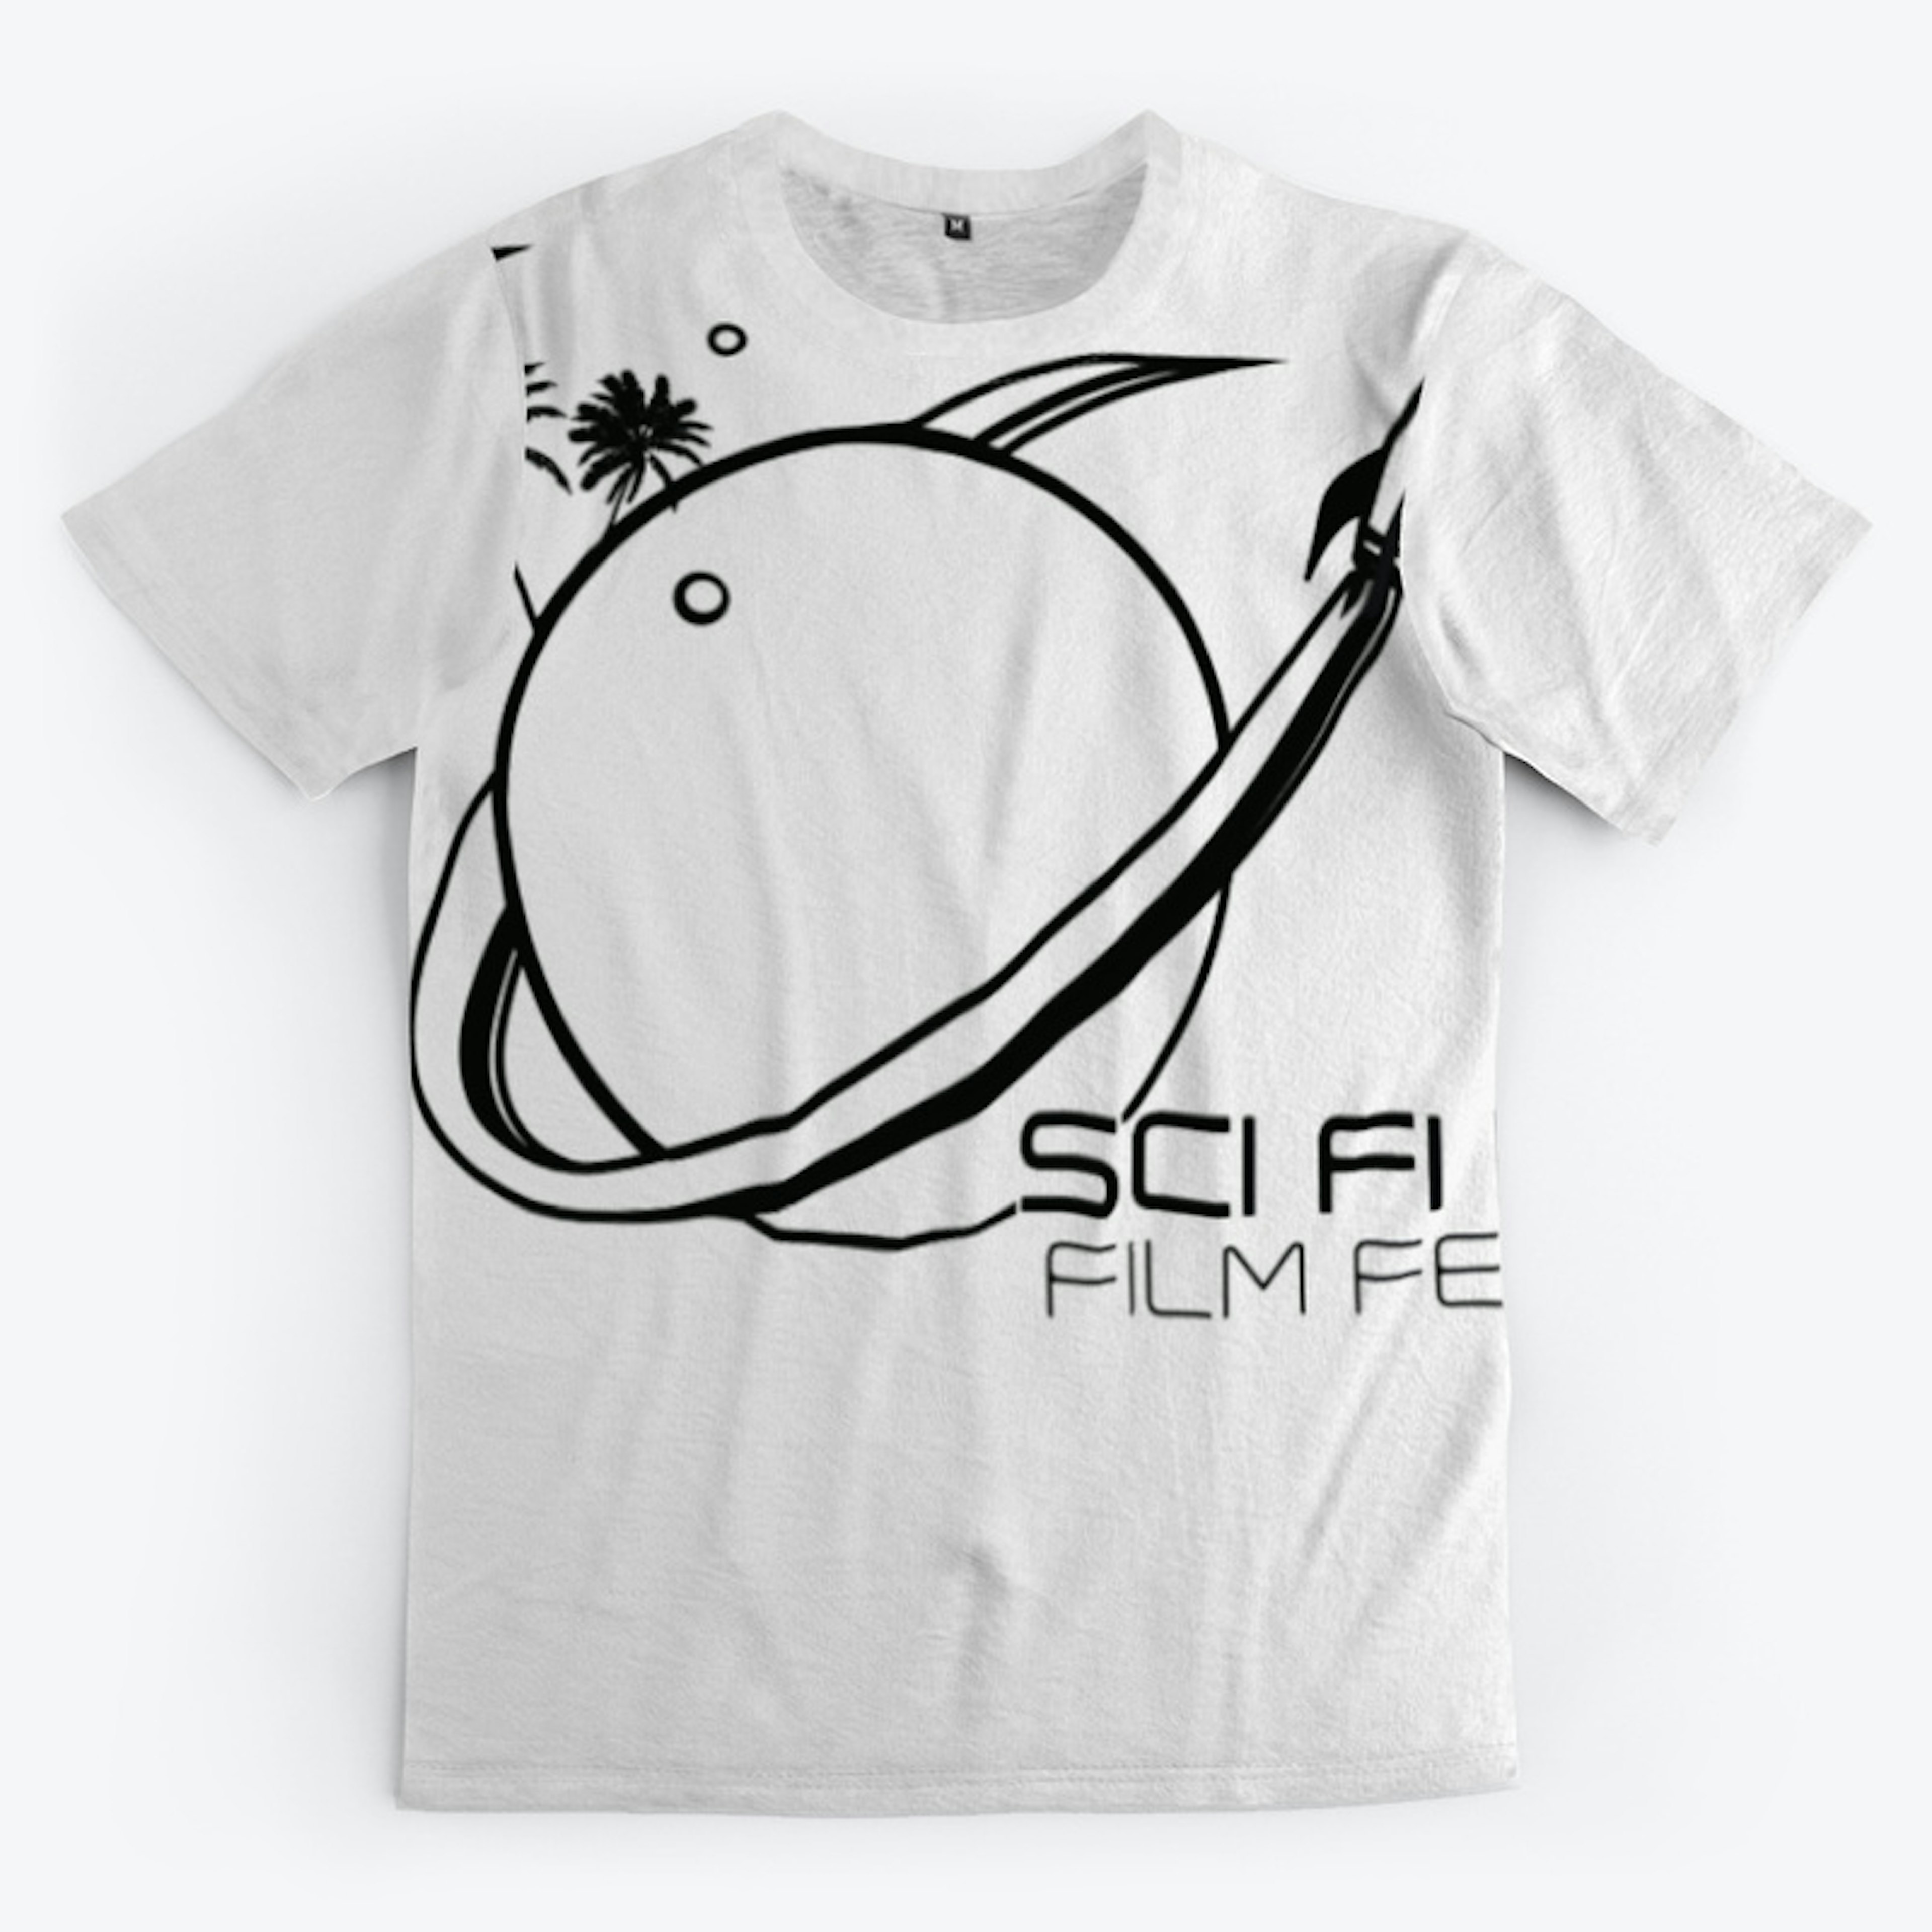 Buy Sci Fi Miami merchandise